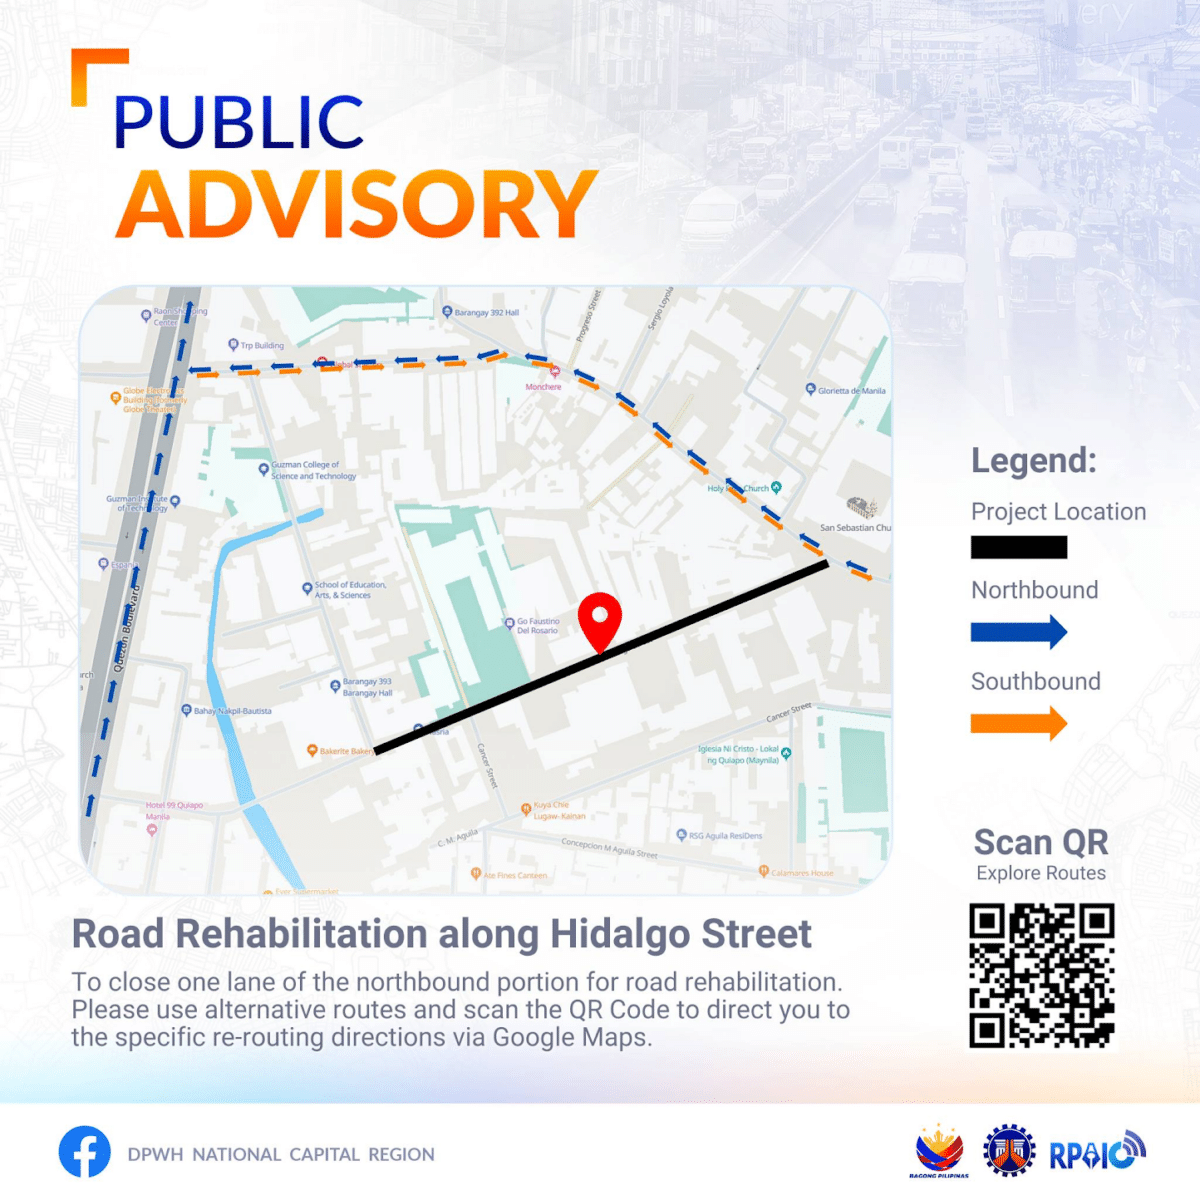 DPWH roadwork to shut portion of Hidalgo Street in Manila